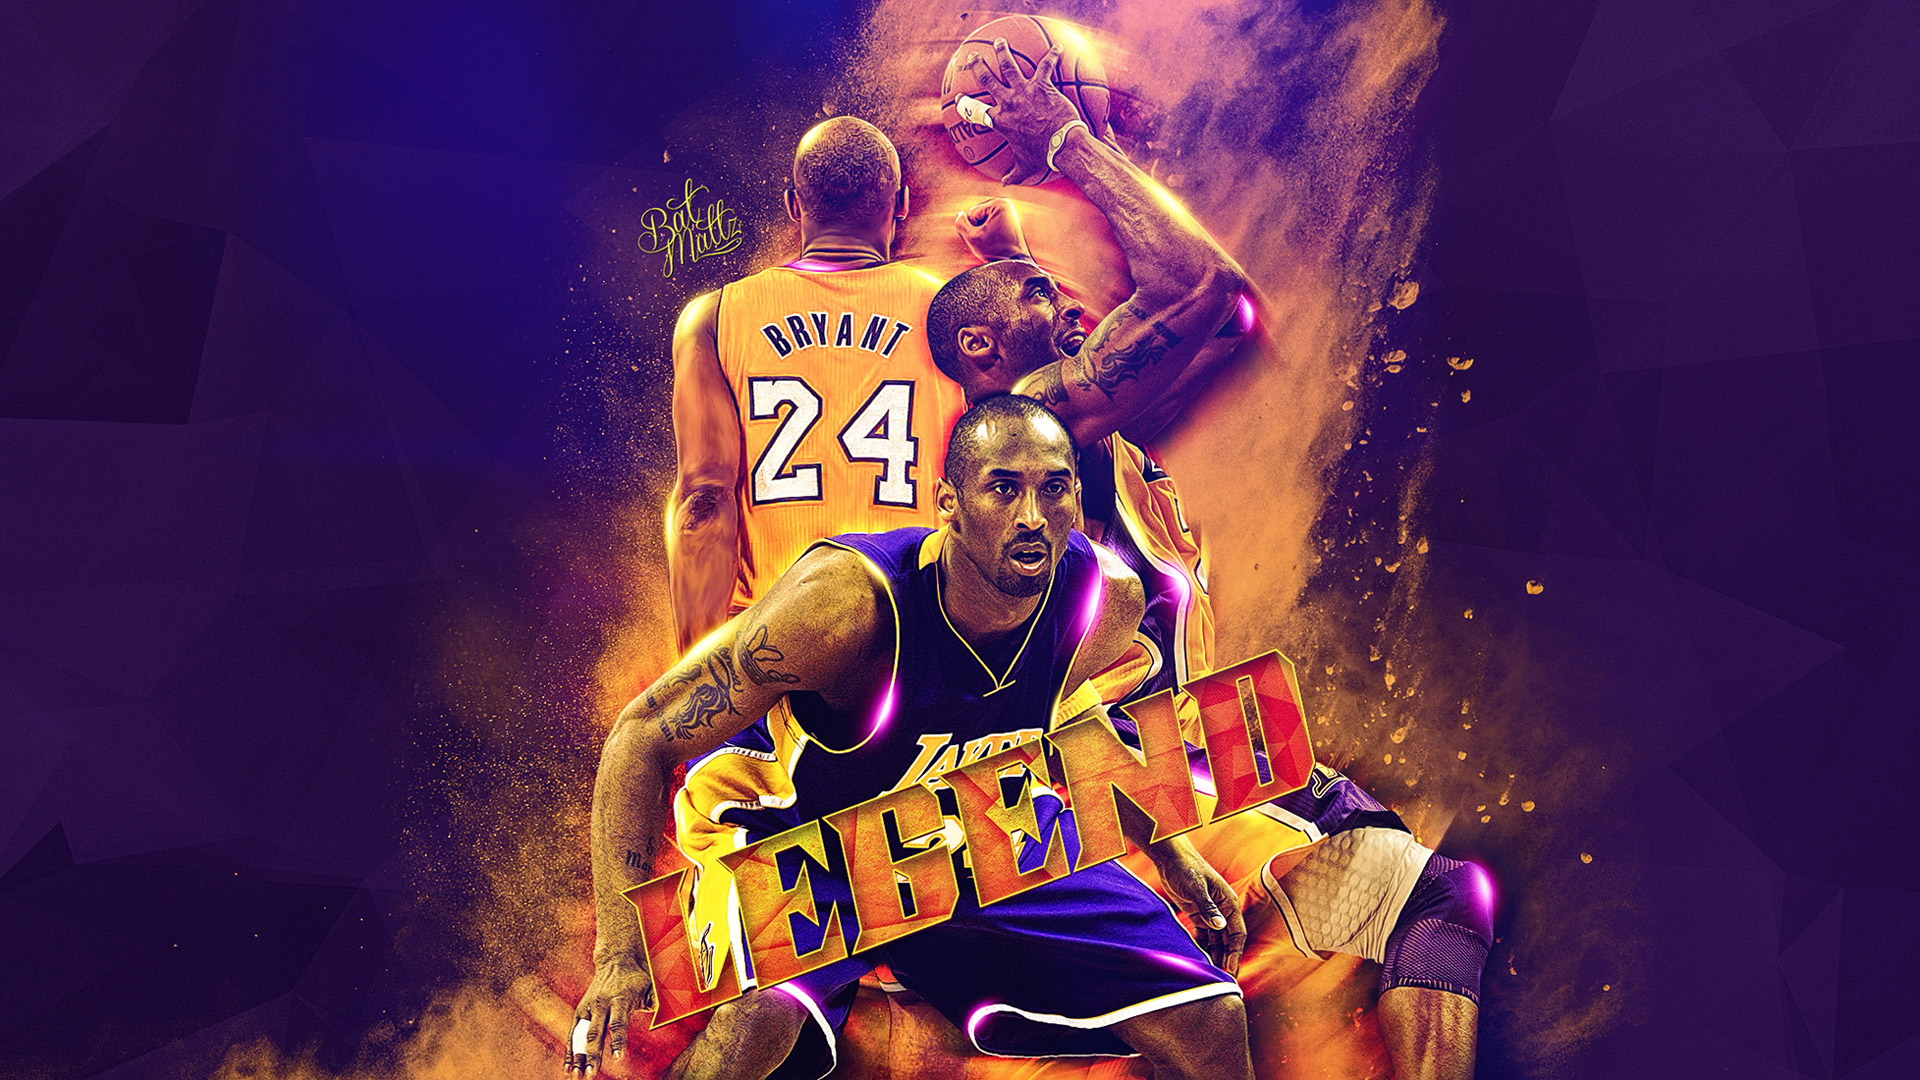 Kobe Bryant Nba Legend Wallpaper Basketball At